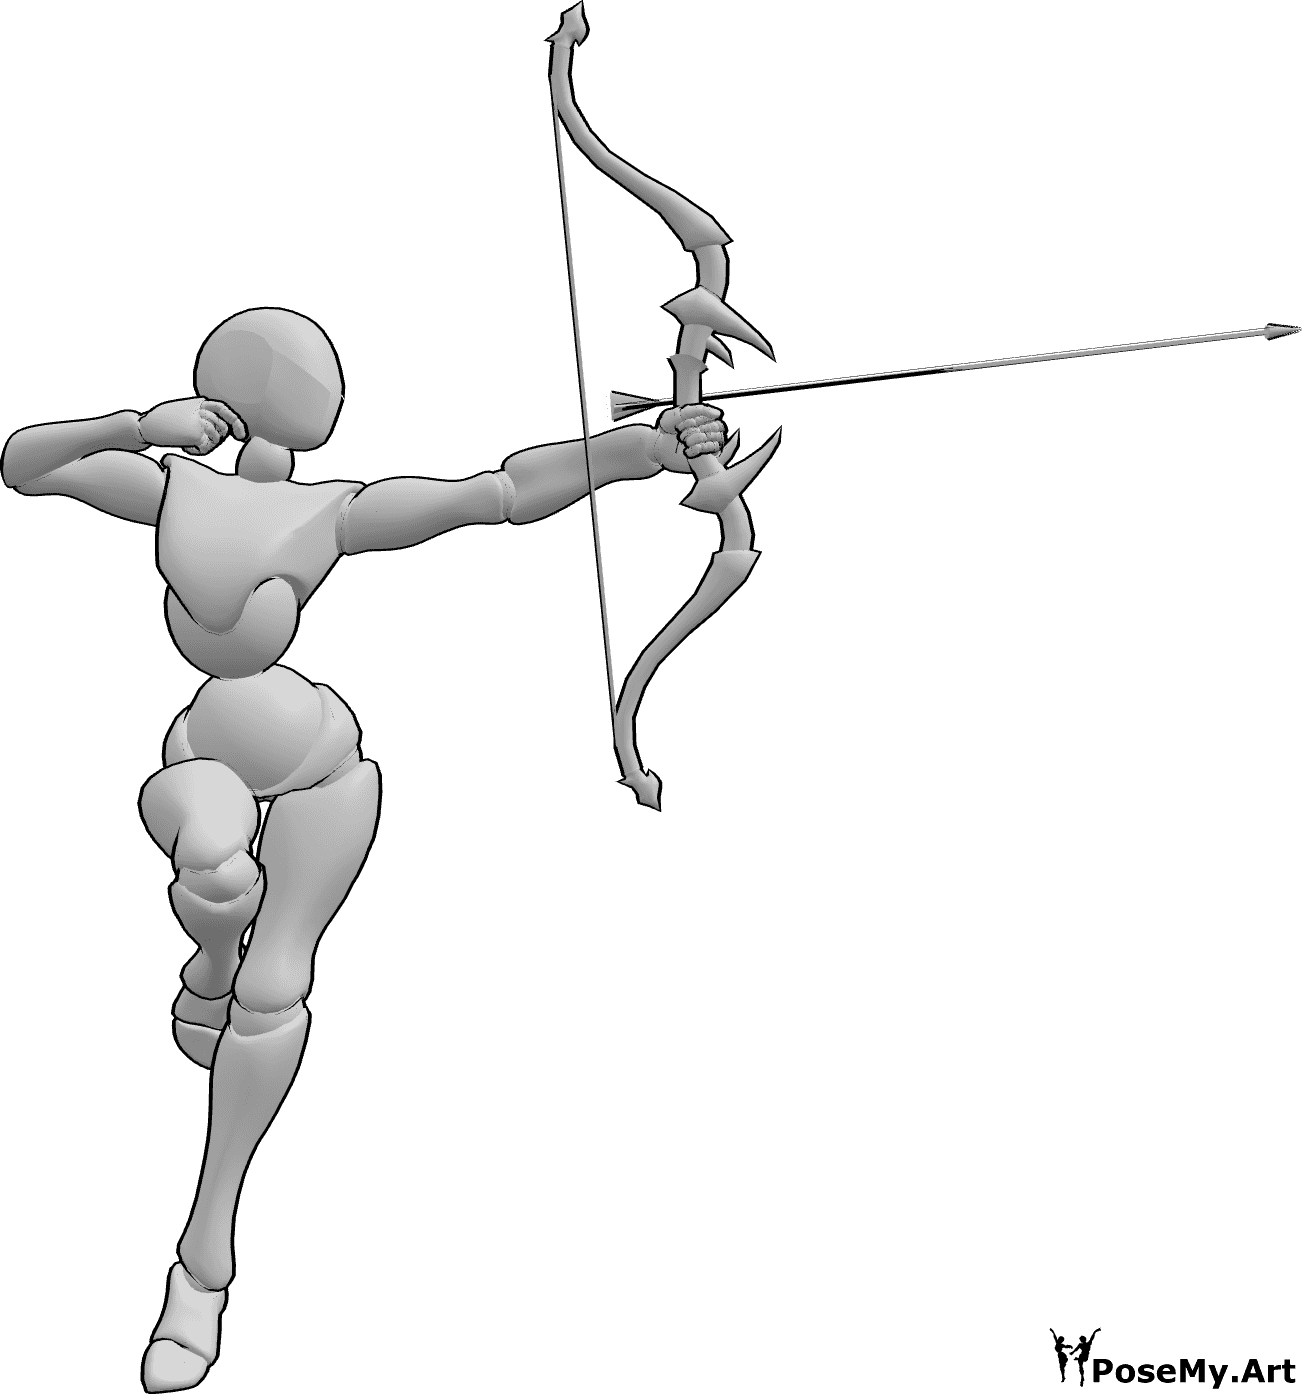 archery pose - Google Search | Human poses reference, Body reference poses,  Drawing reference poses